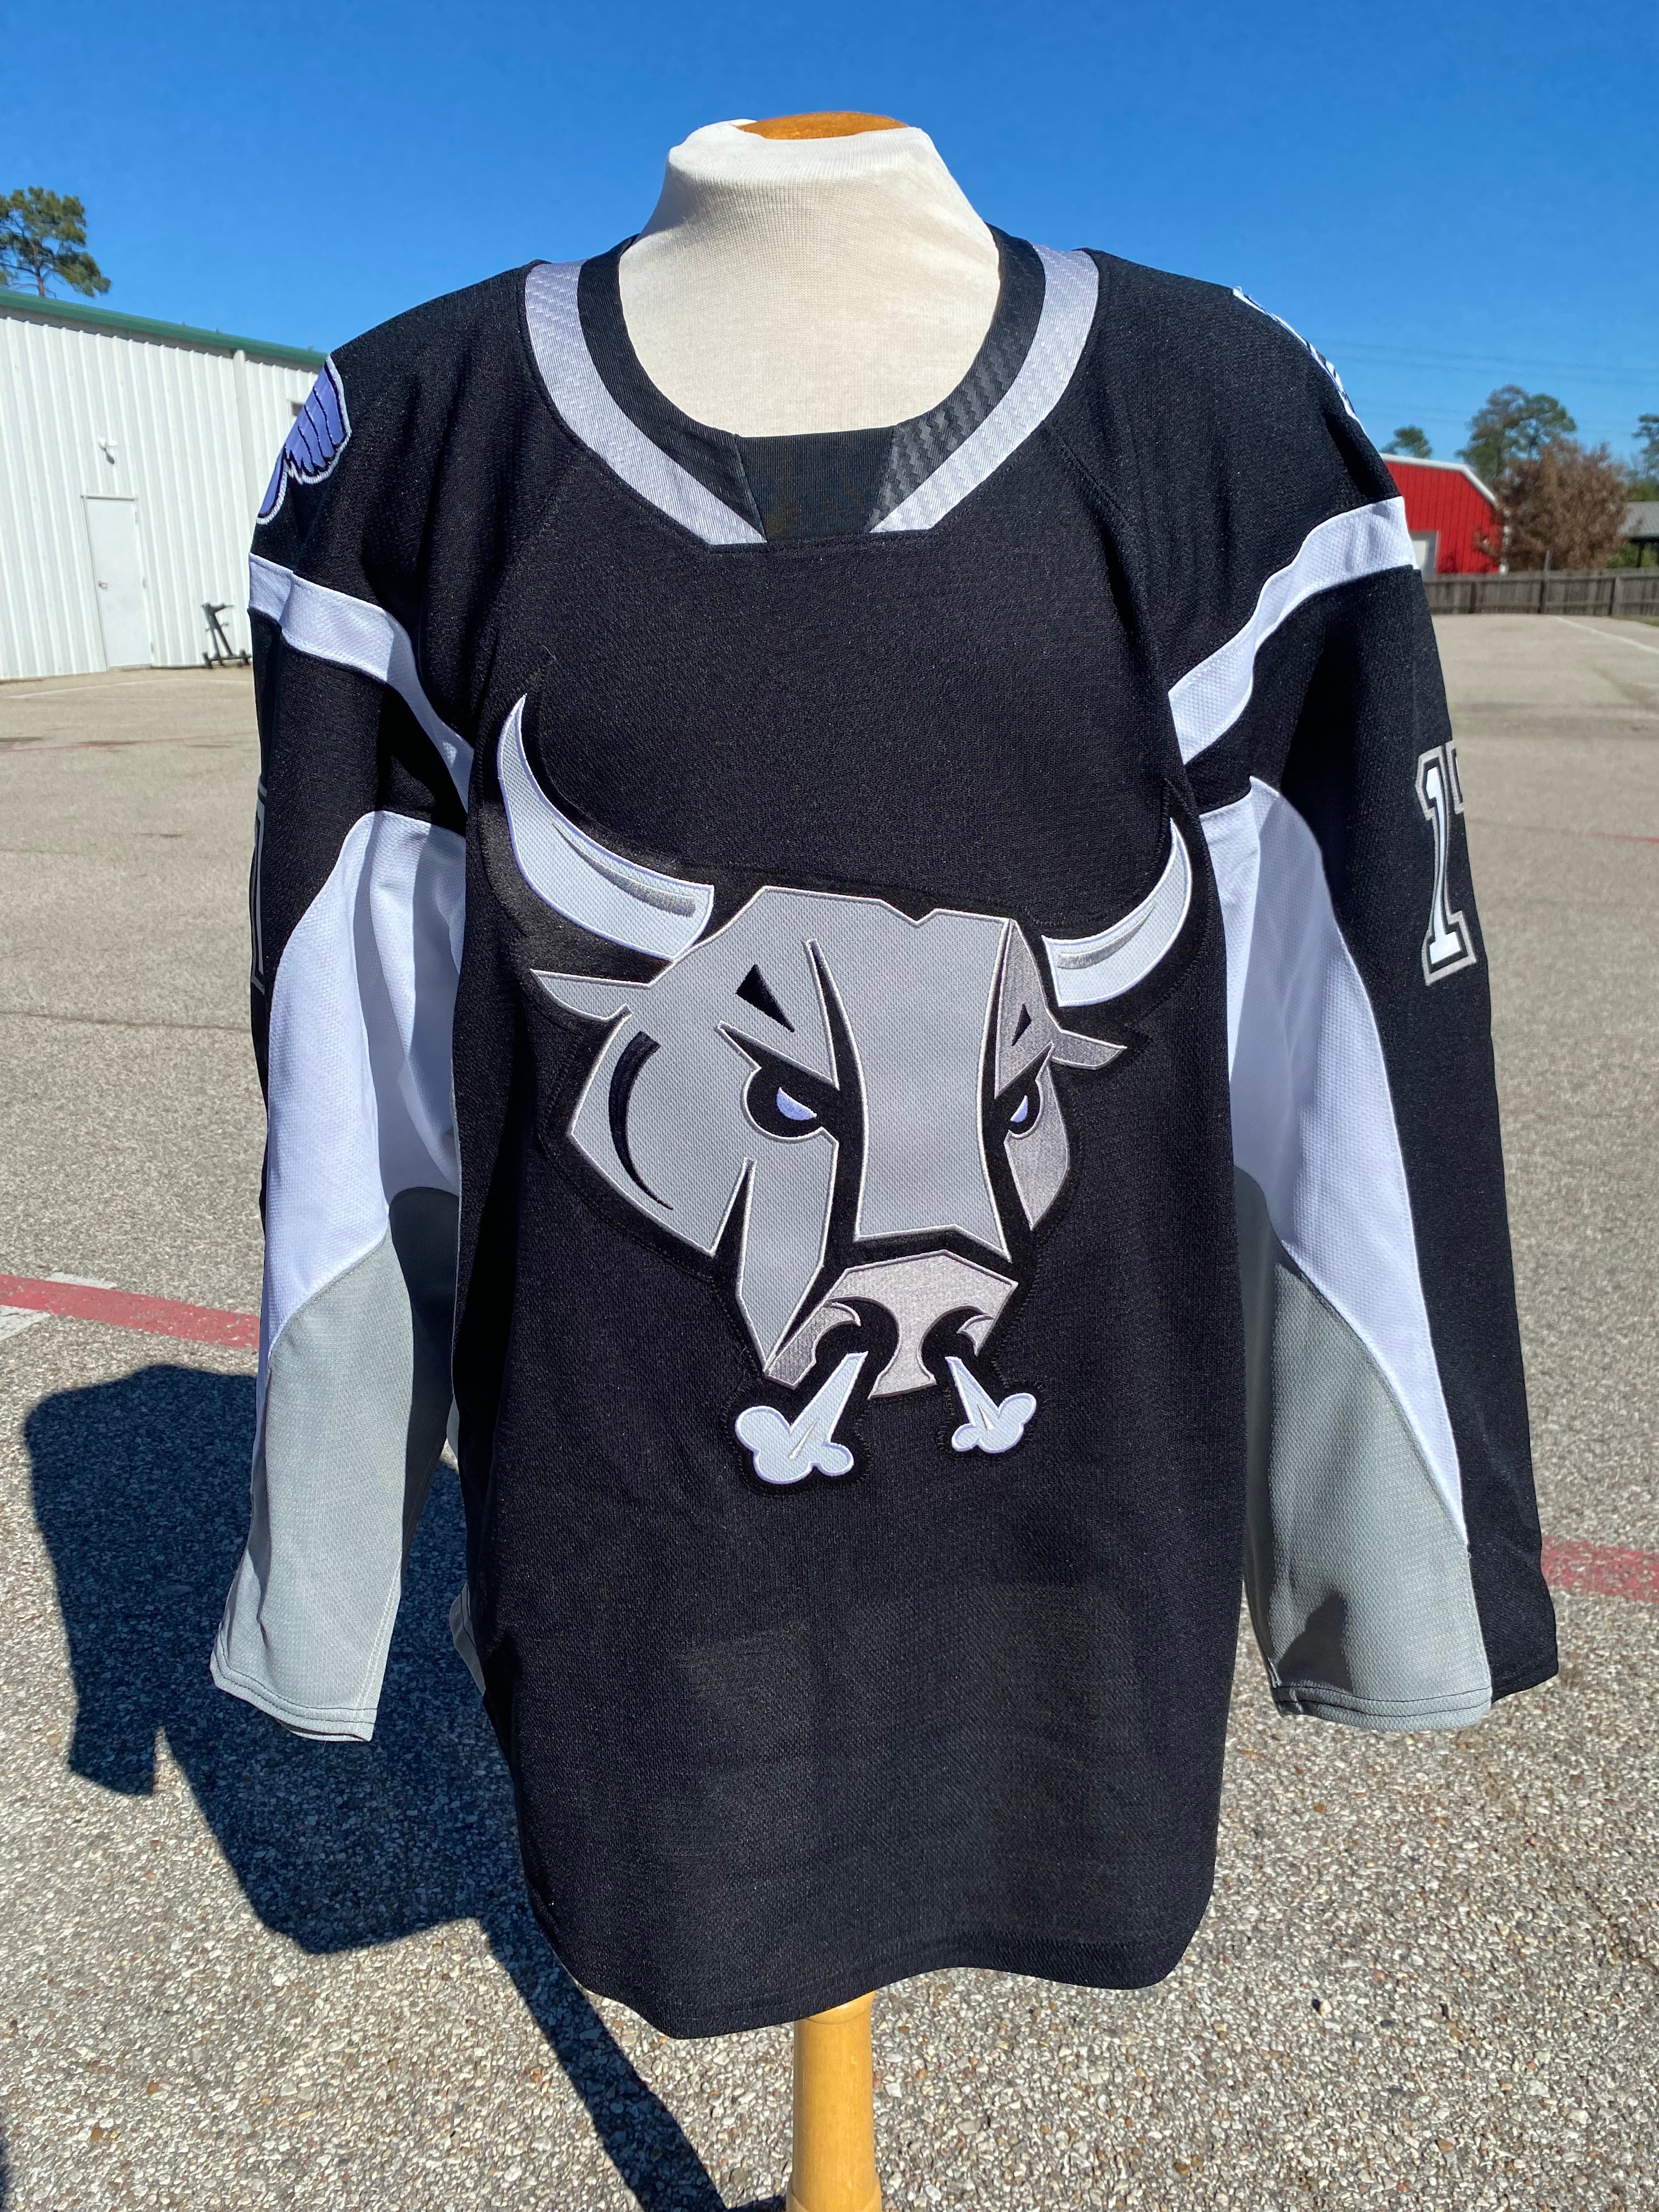 ISO This San Antonio Rampage jersey : r/hockeyjerseys